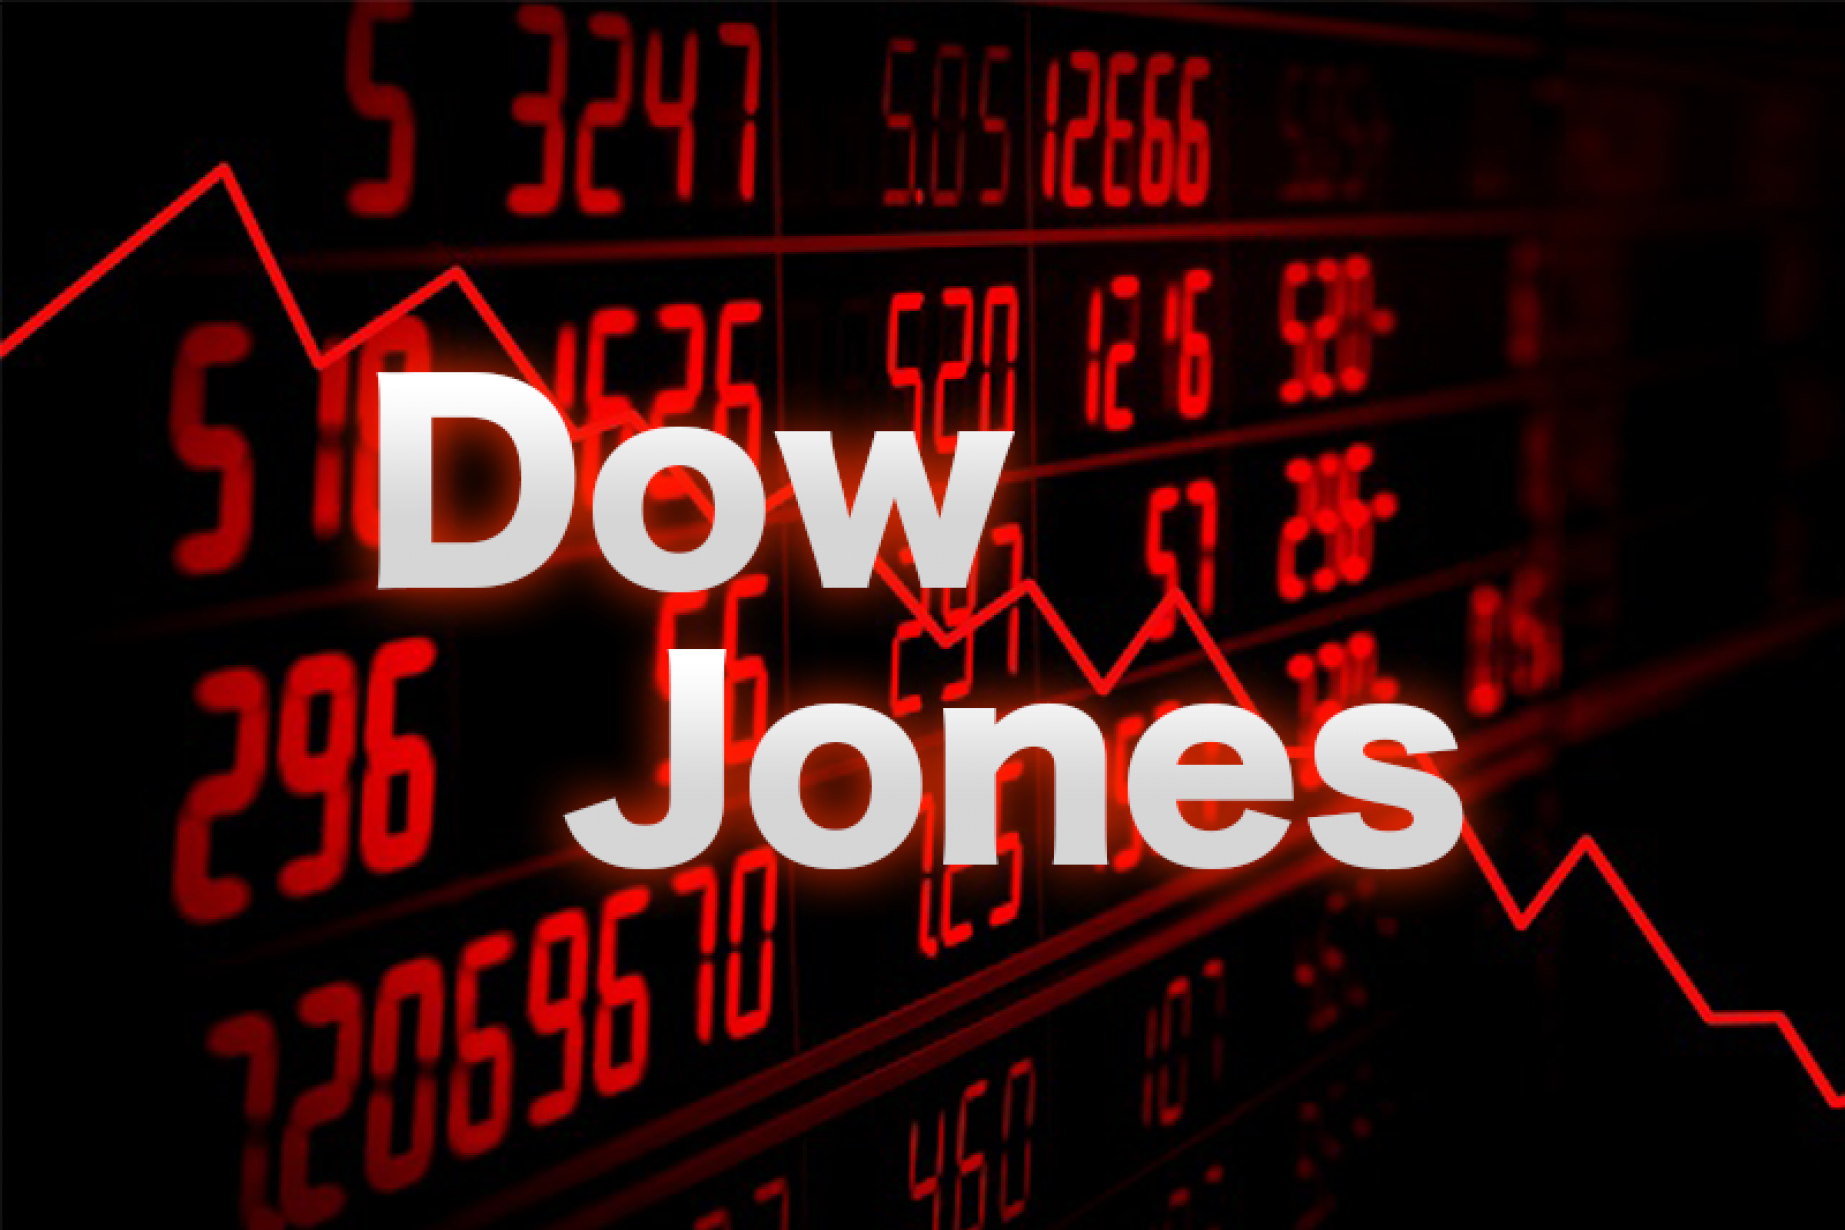 Dow Jones Future Live Index Chart